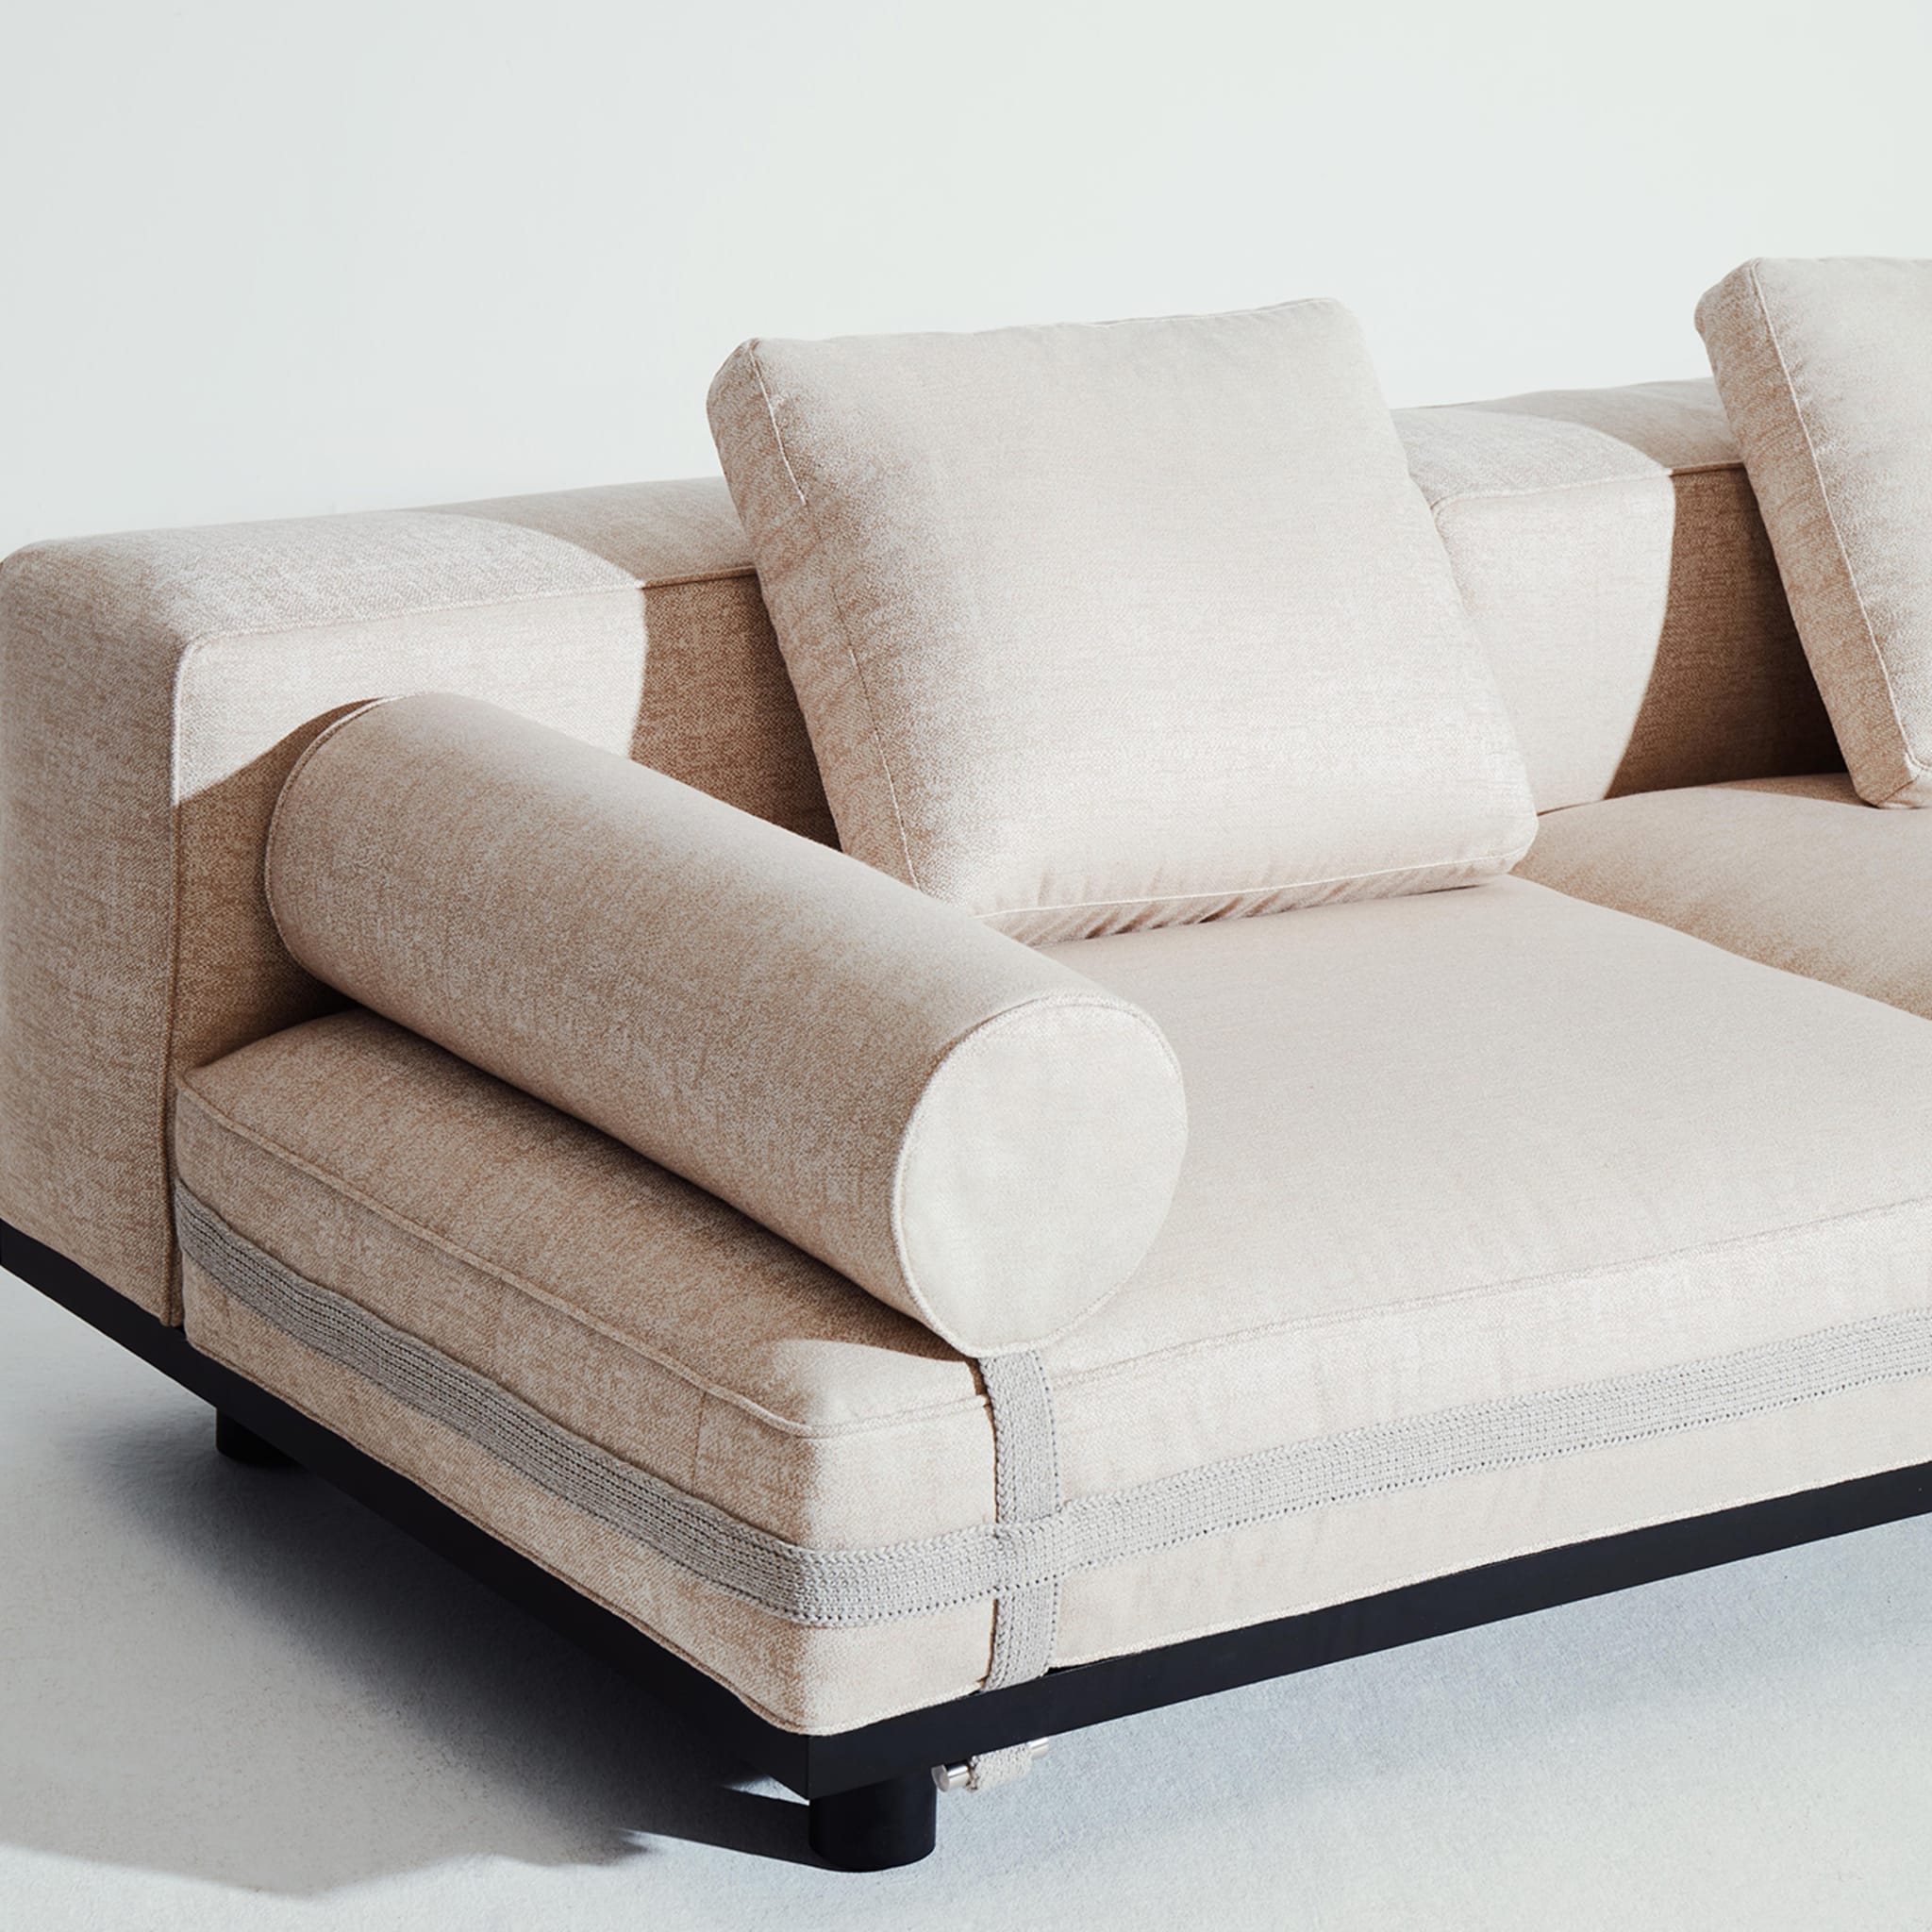 Saint Remy White 2-Seater Sofa #2 by Luca Nichetto - Alternative view 1